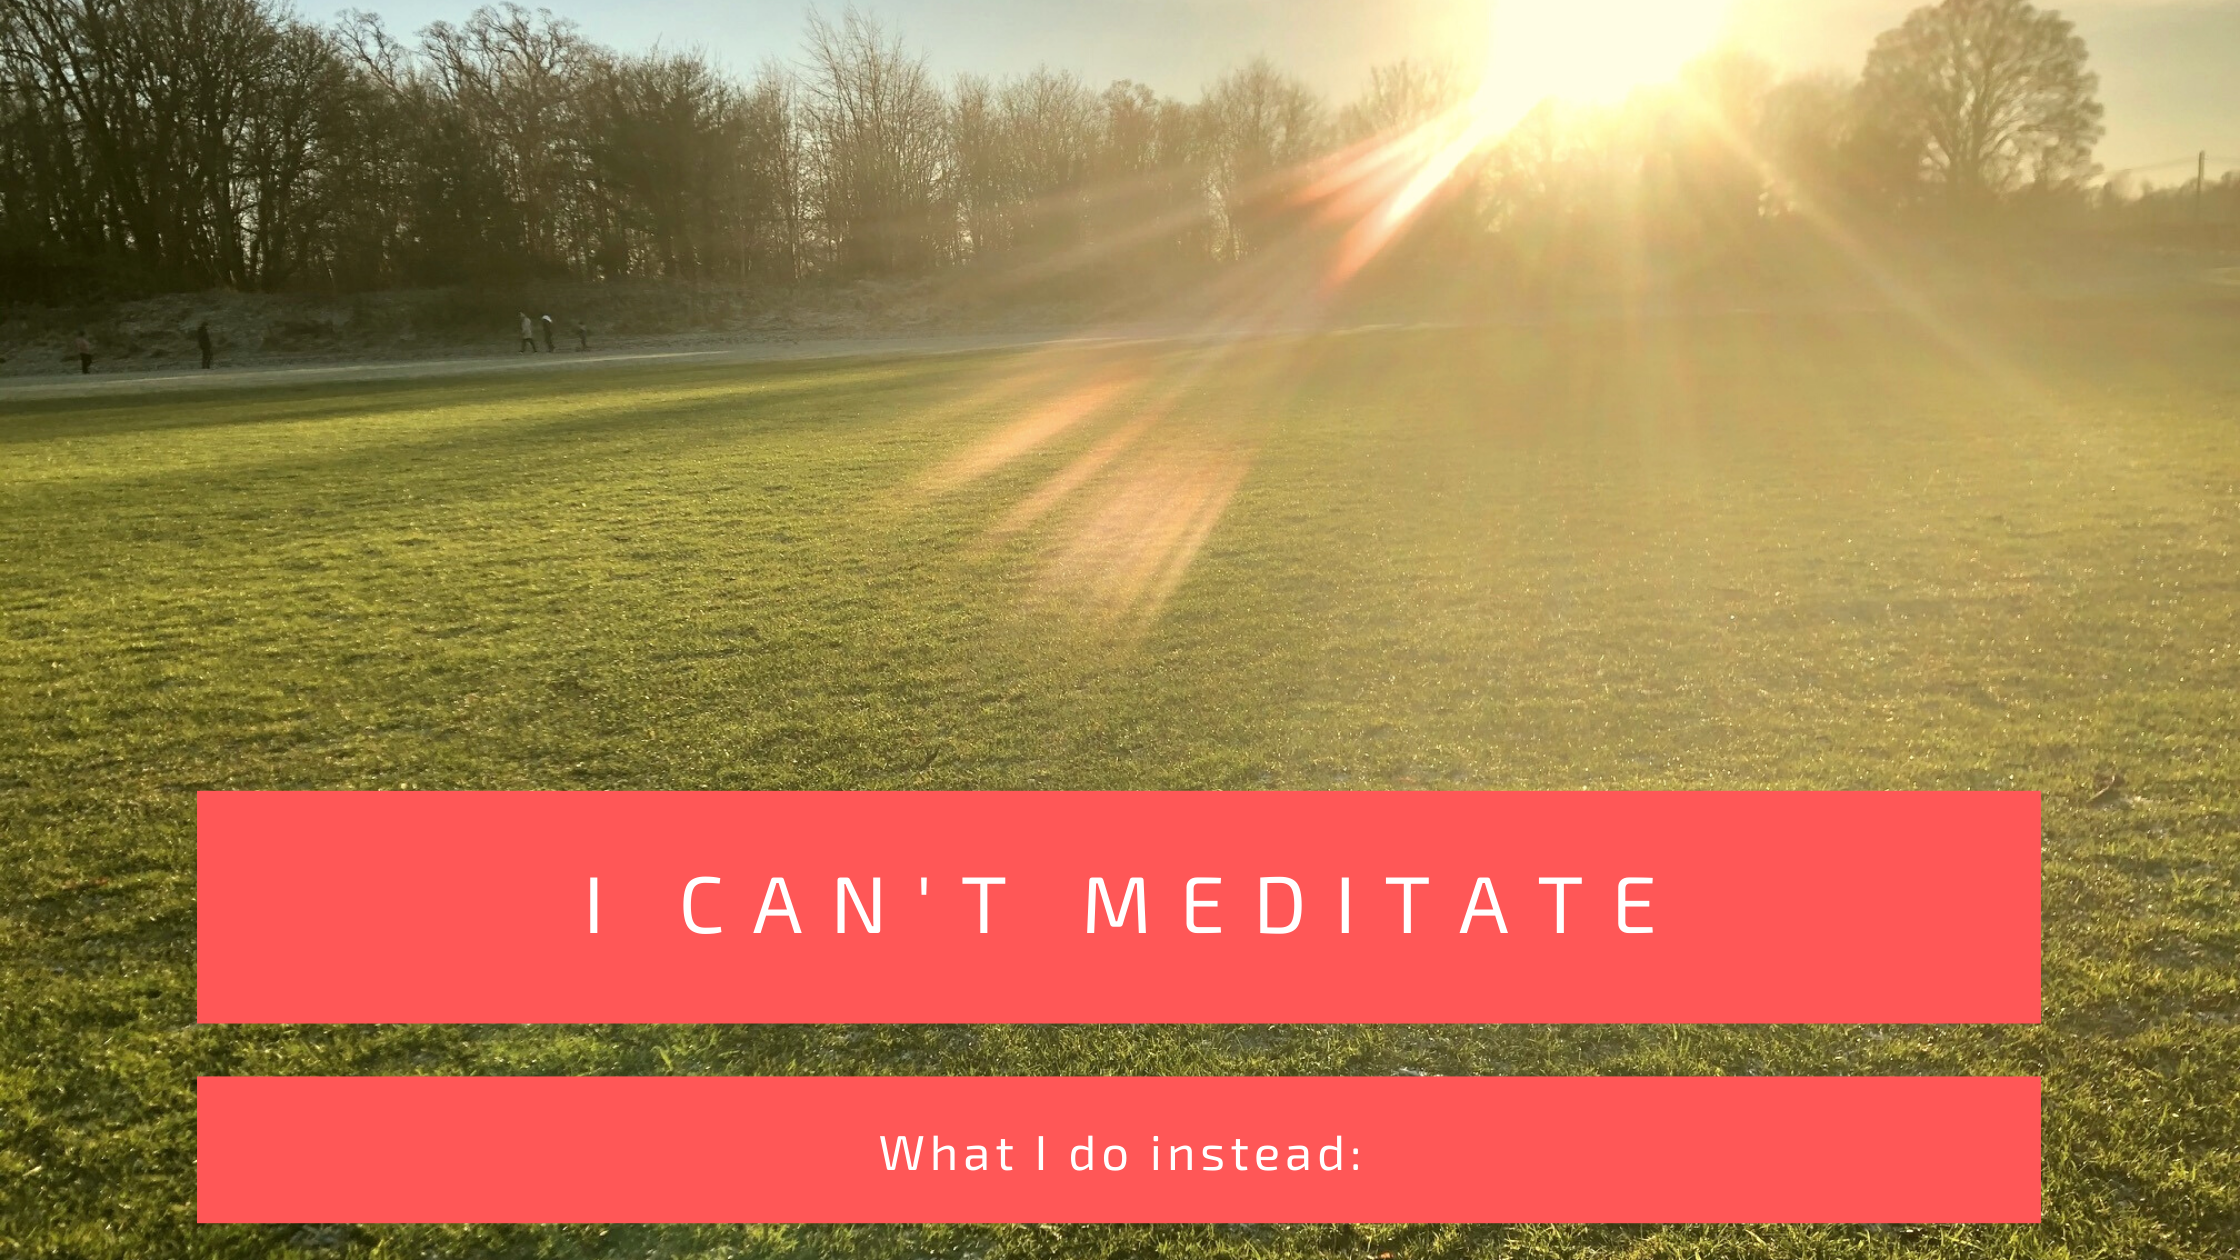 I can't meditate